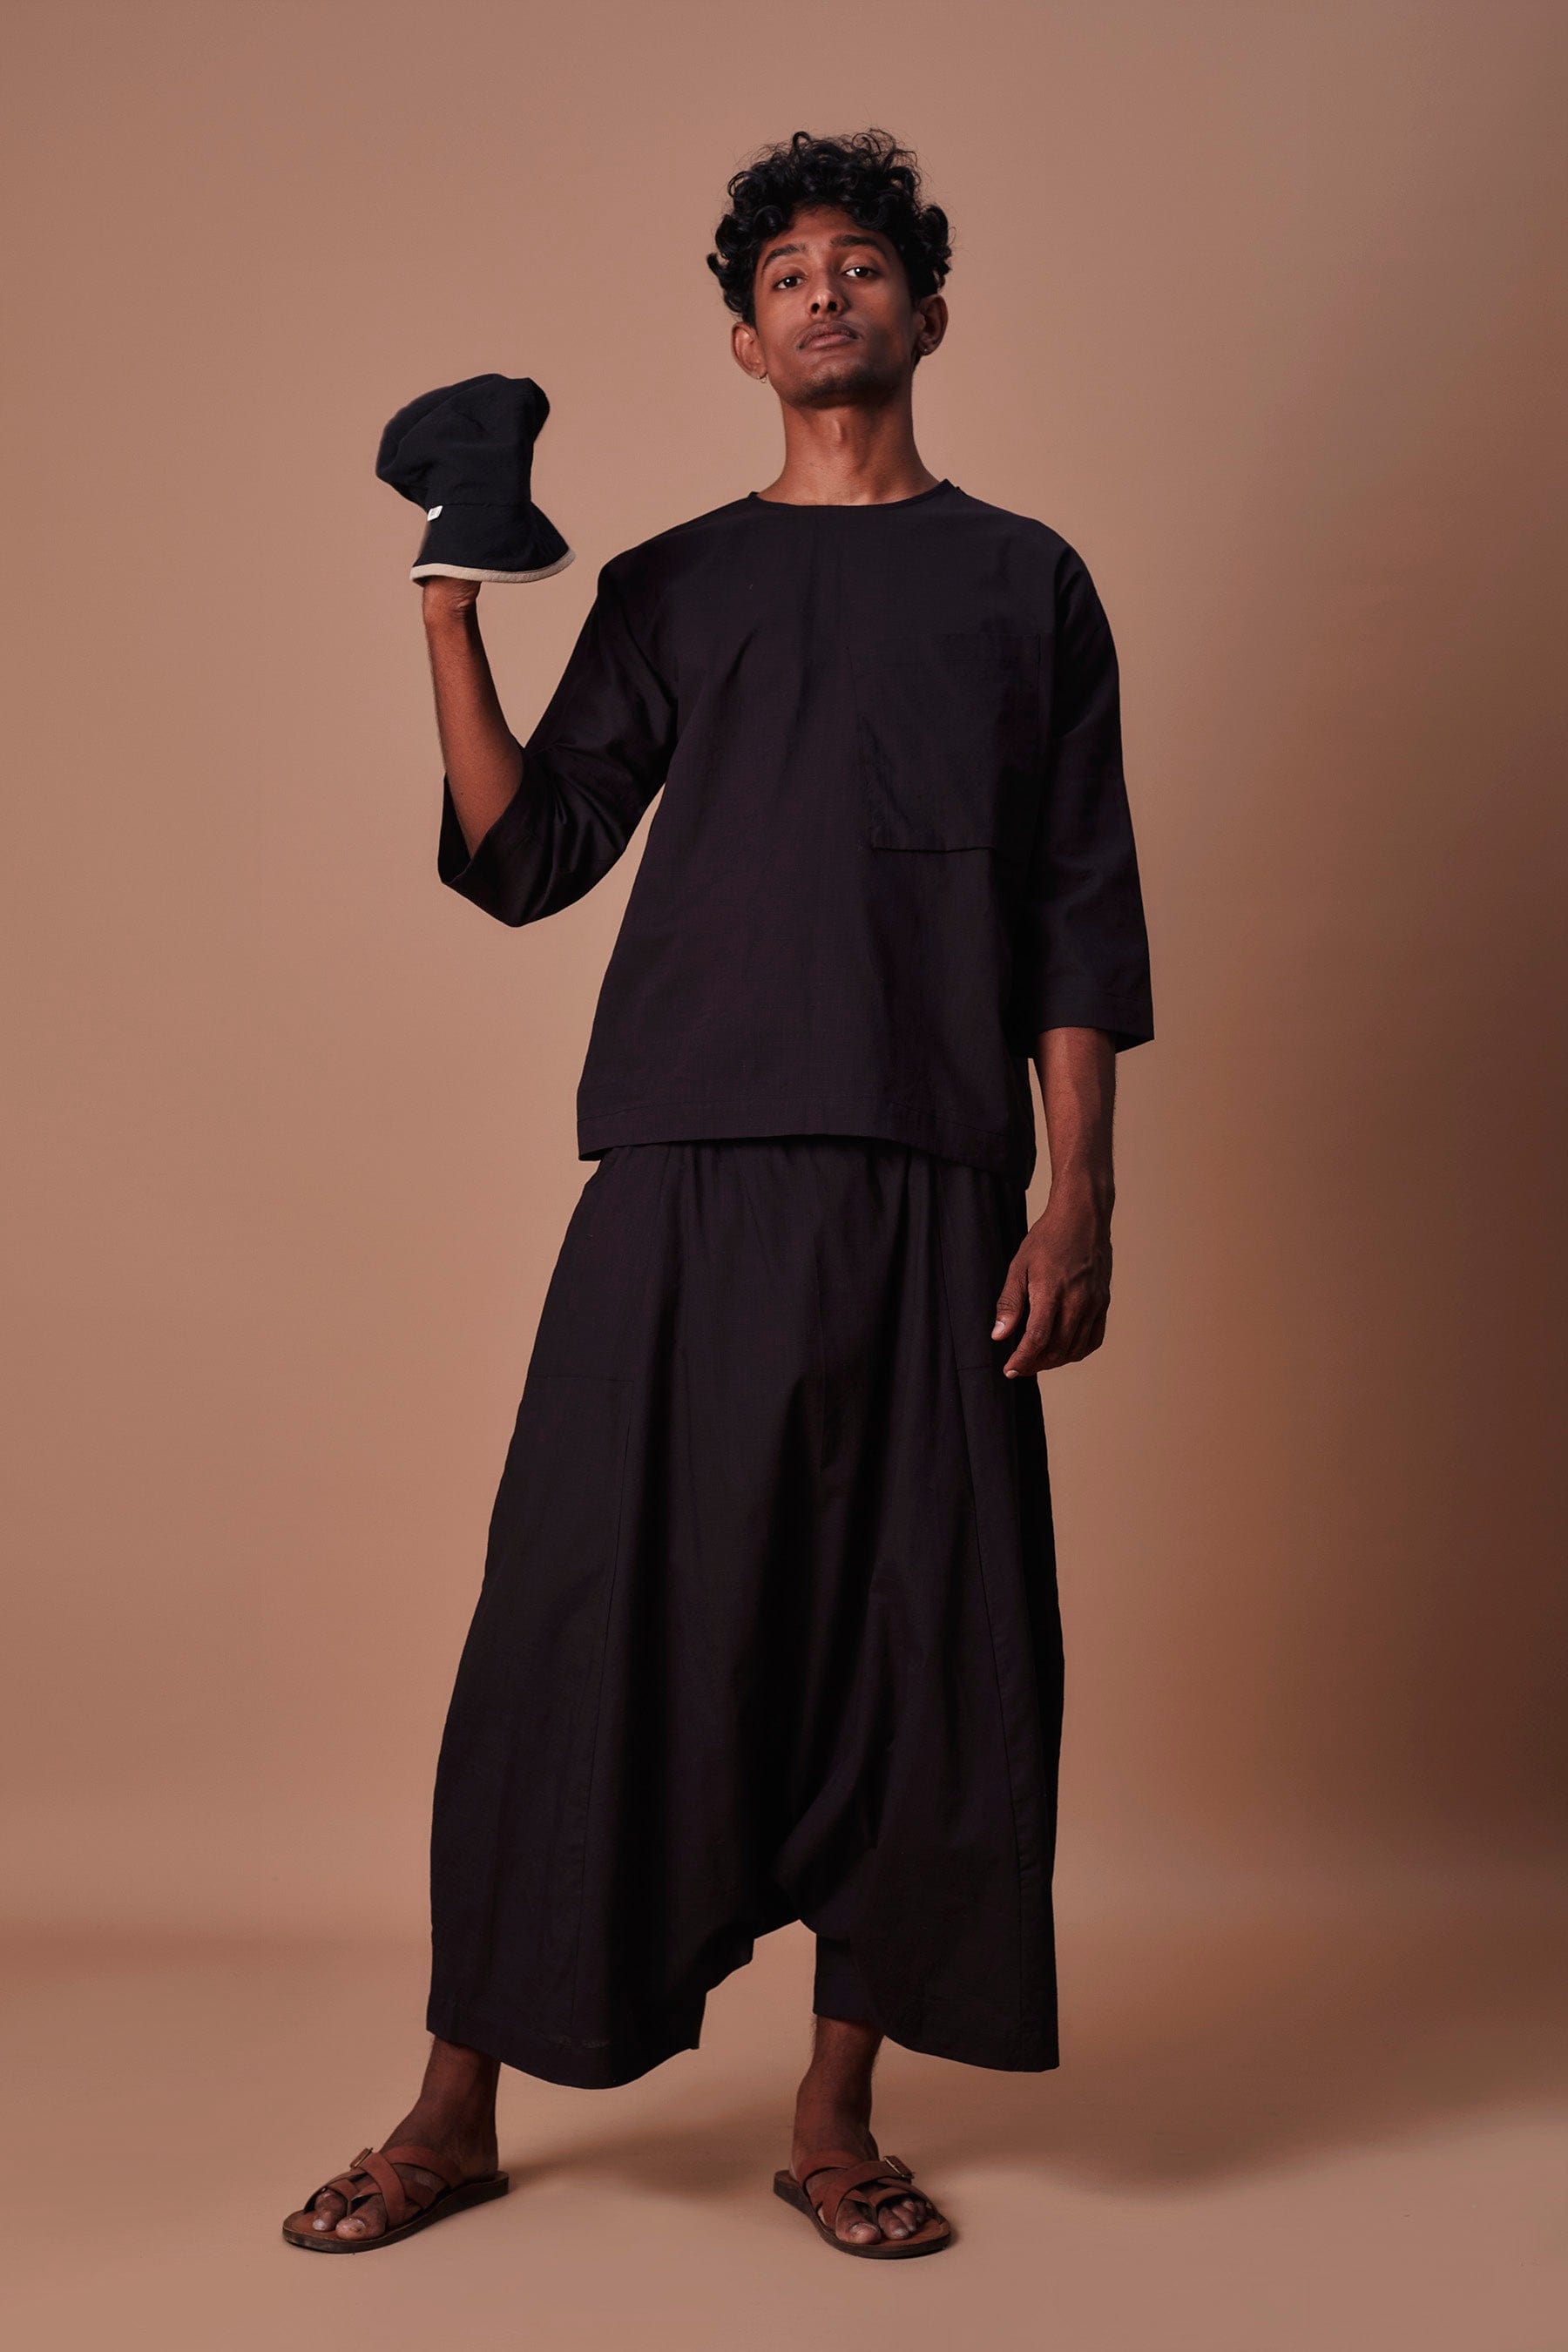 Buy QIANXIZHAN Women's Harem Pants, High Waist Yoga Boho Trousers with  Pockets, Black, X-Large at Amazon.in